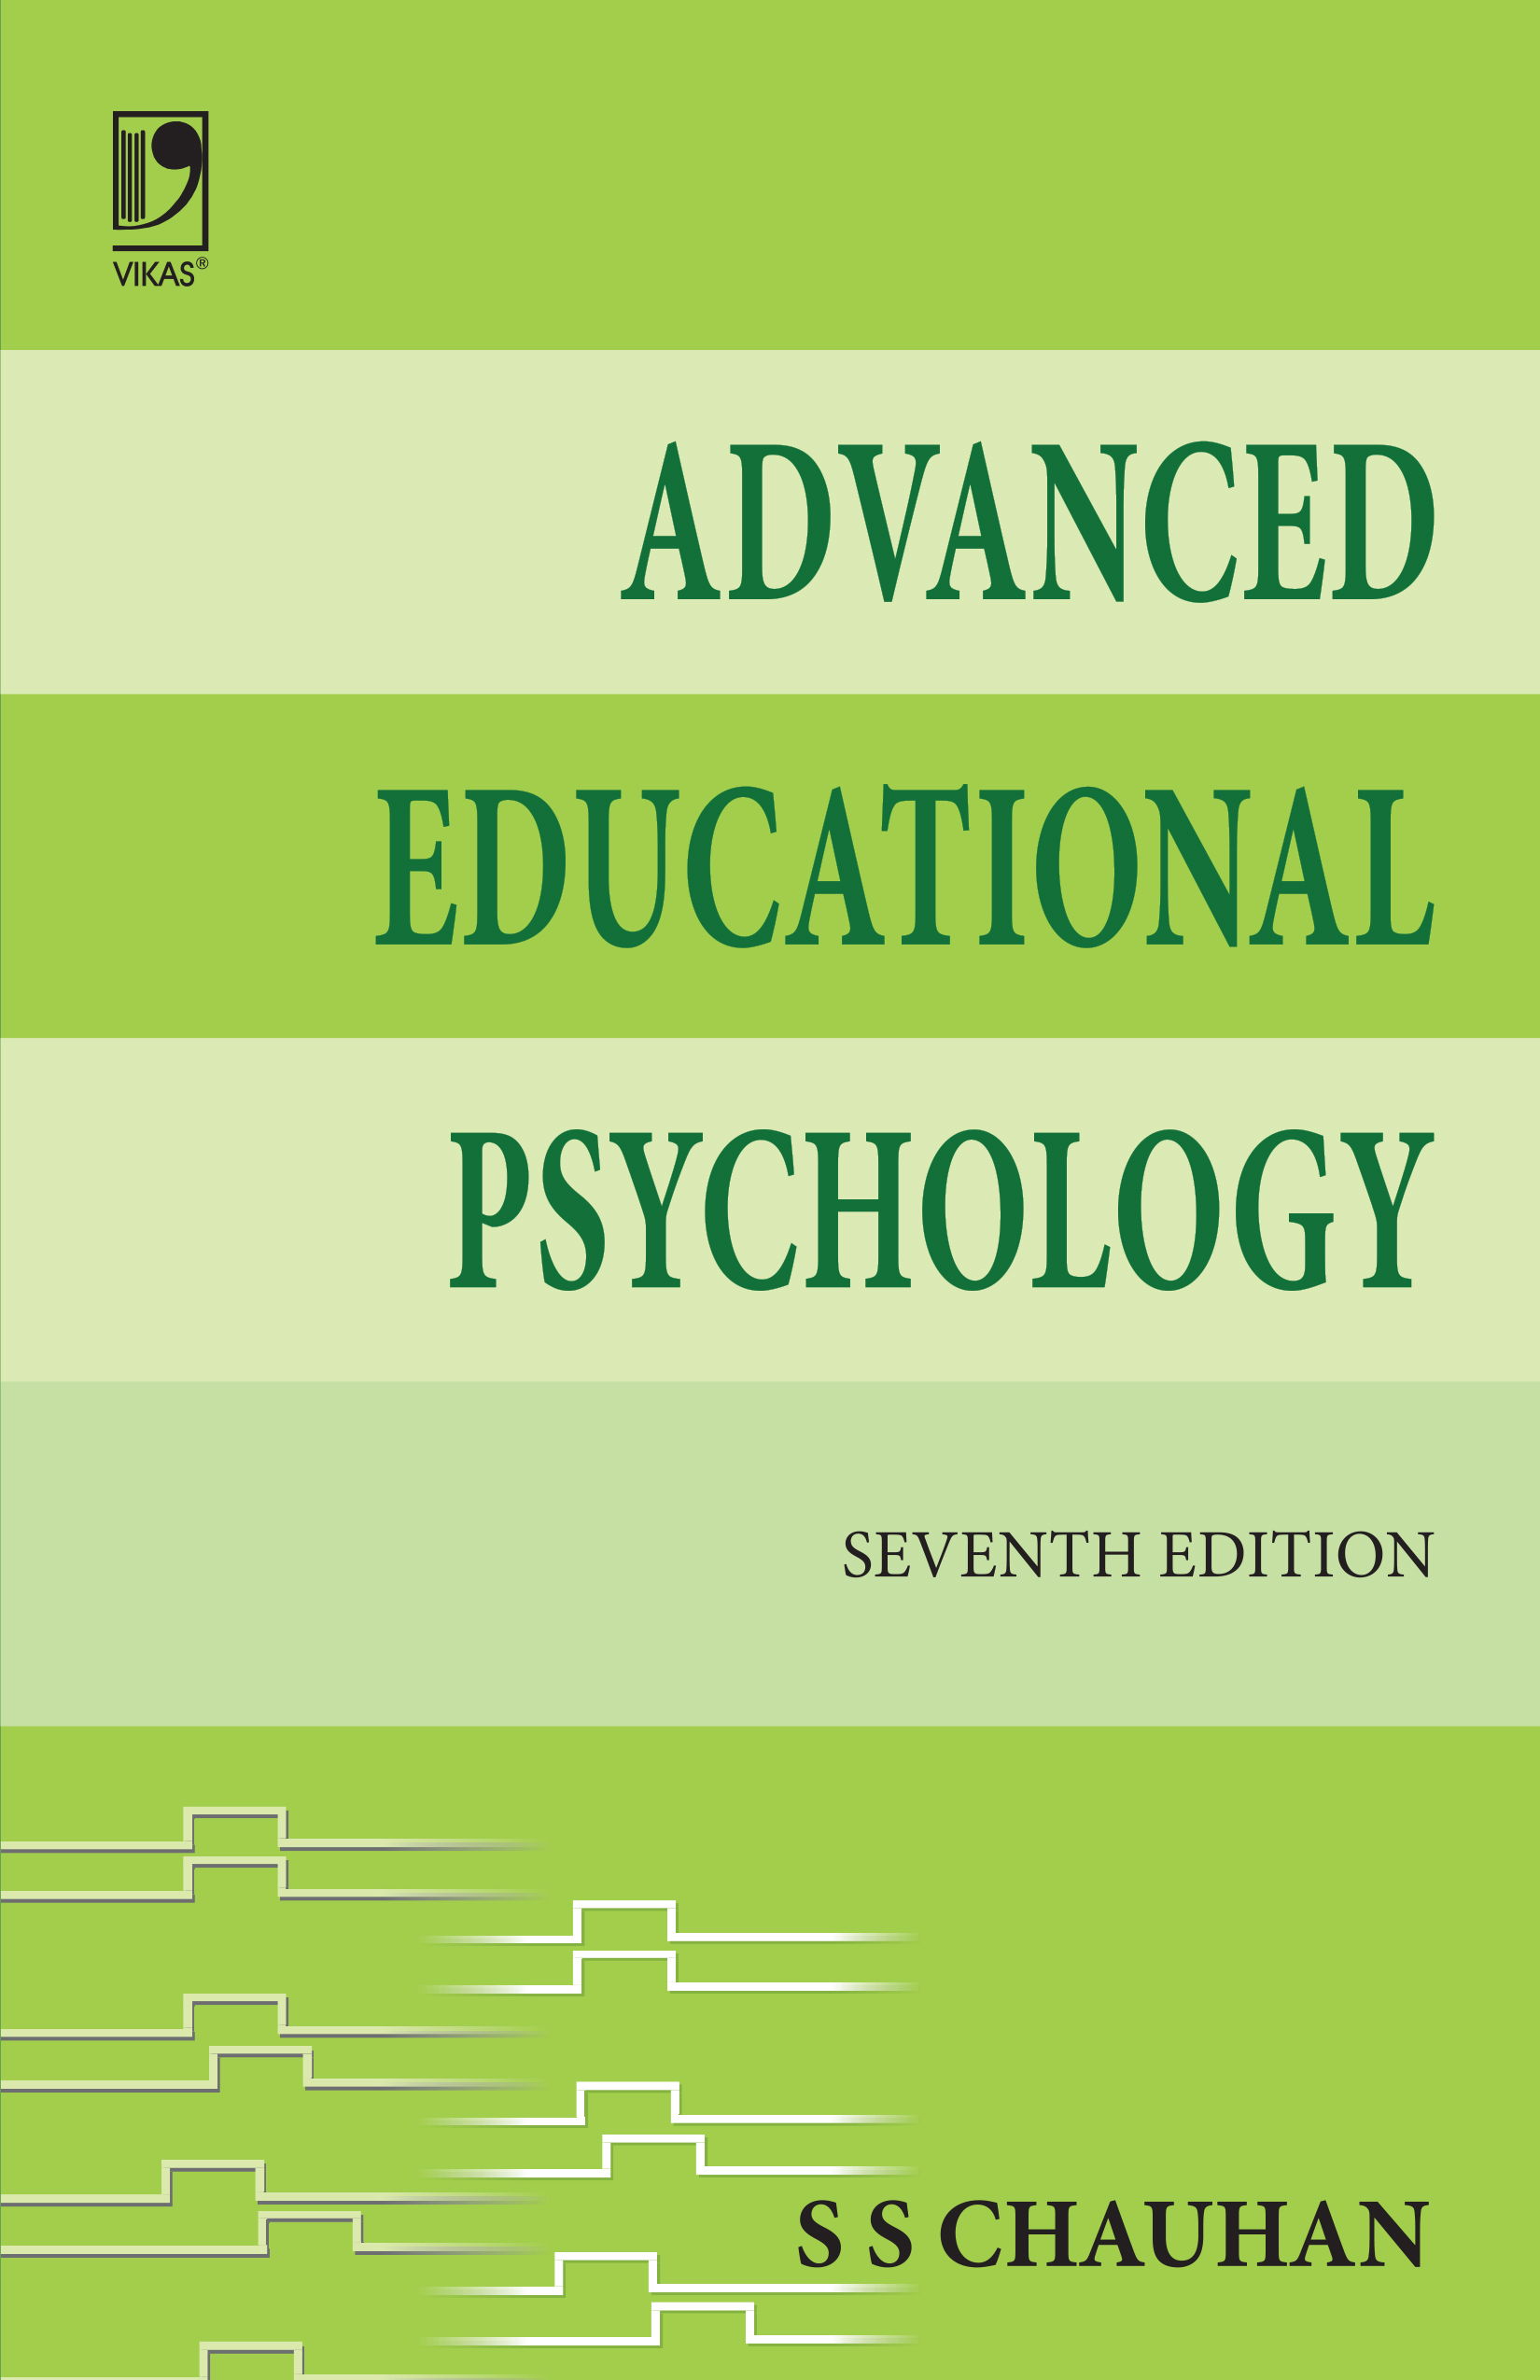 books on educational psychology